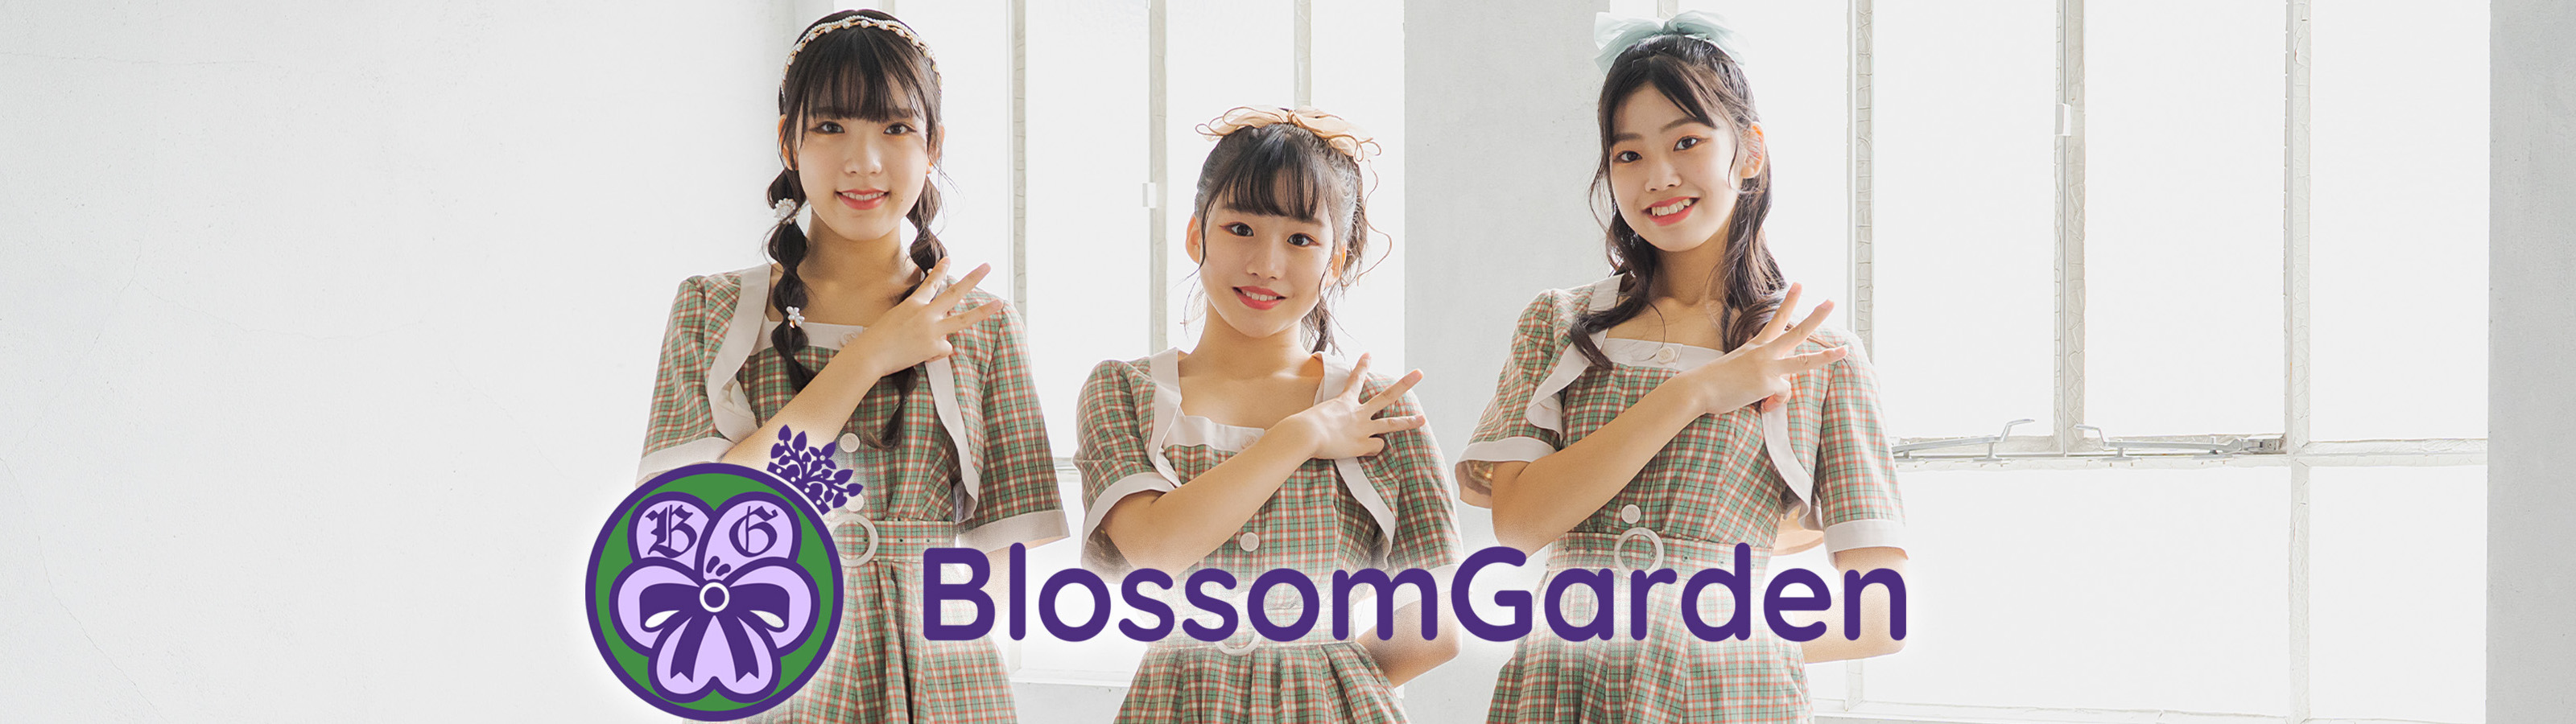 Blossom Garden Official Twitter